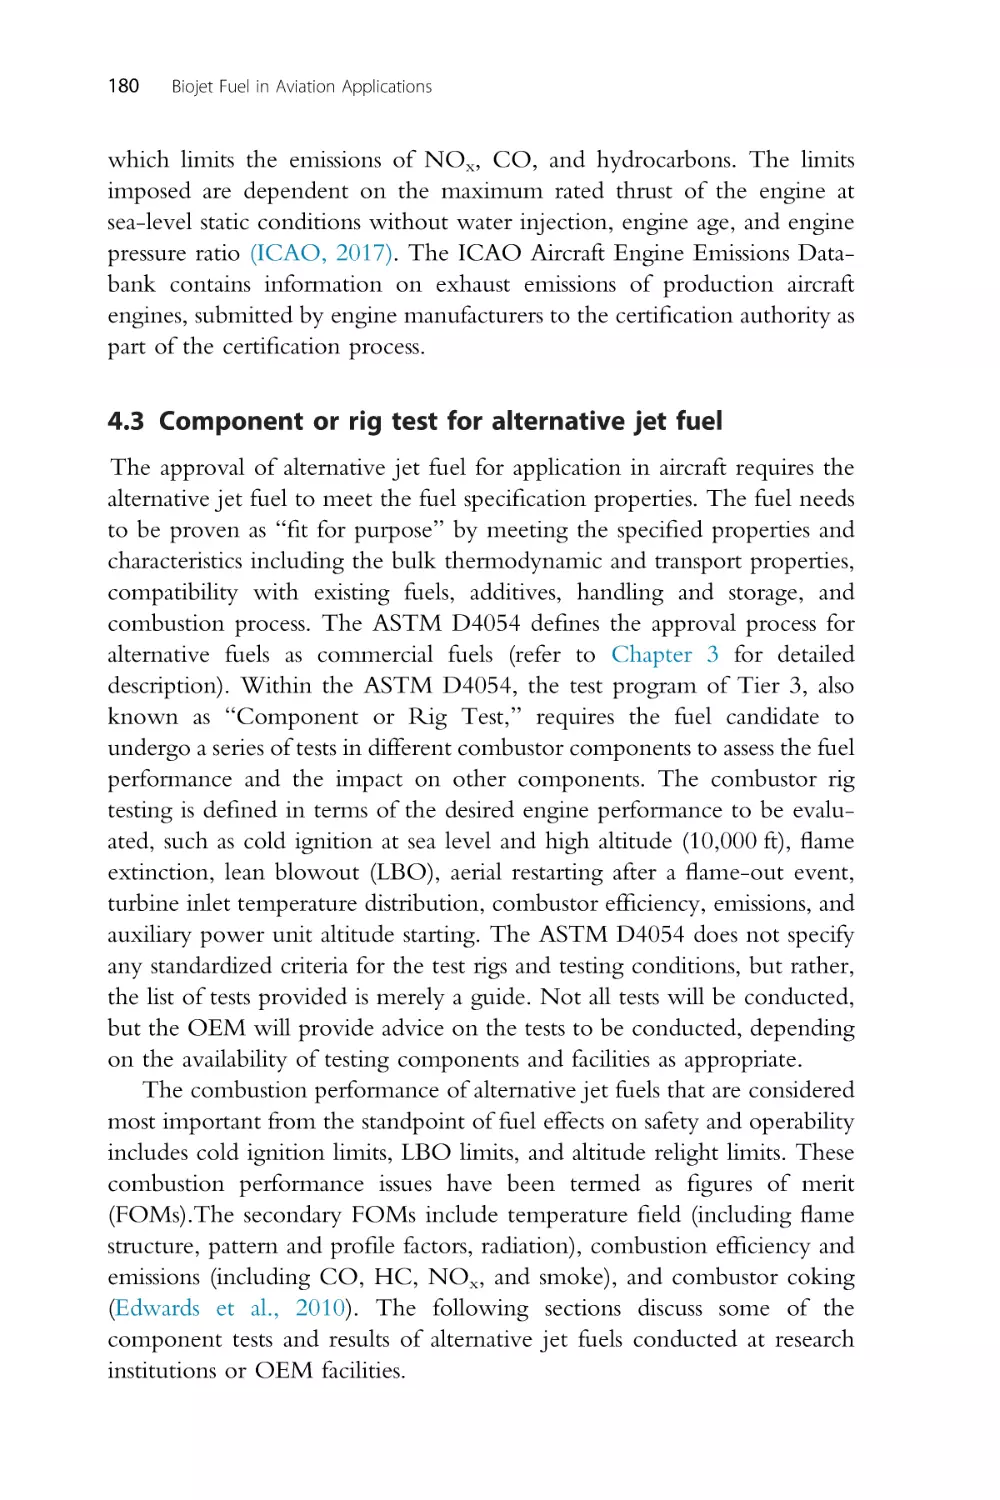 4.3 Component or rig test for alternative jet fuel